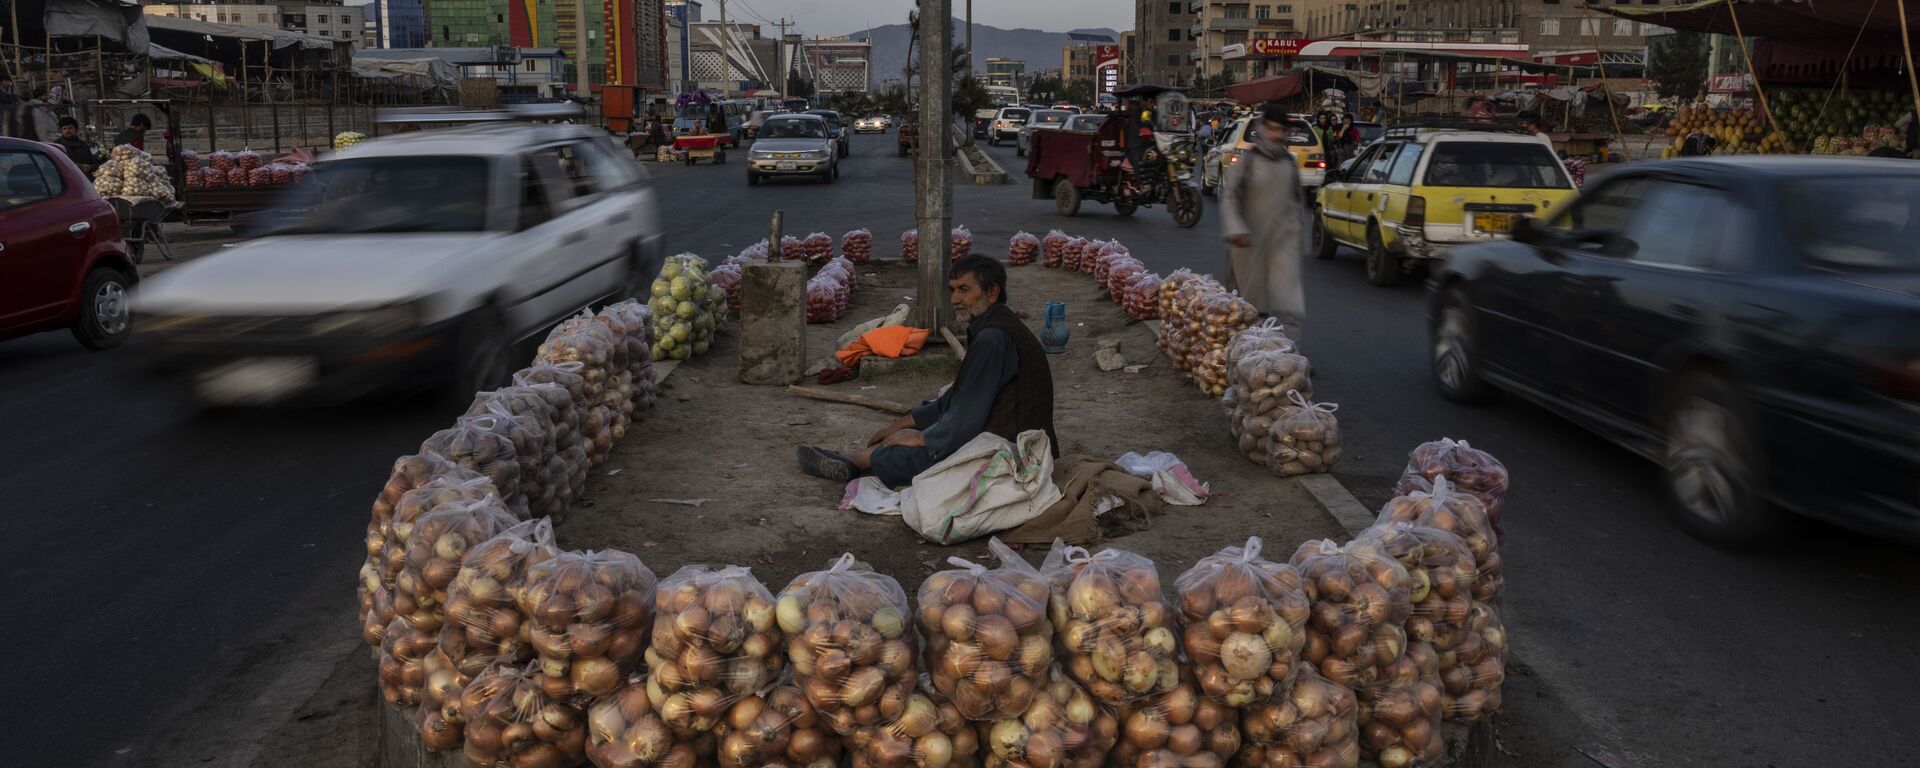 Афганец продает фрукты на улице в Кабуле, Афганистан - Sputnik Азербайджан, 1920, 07.10.2021